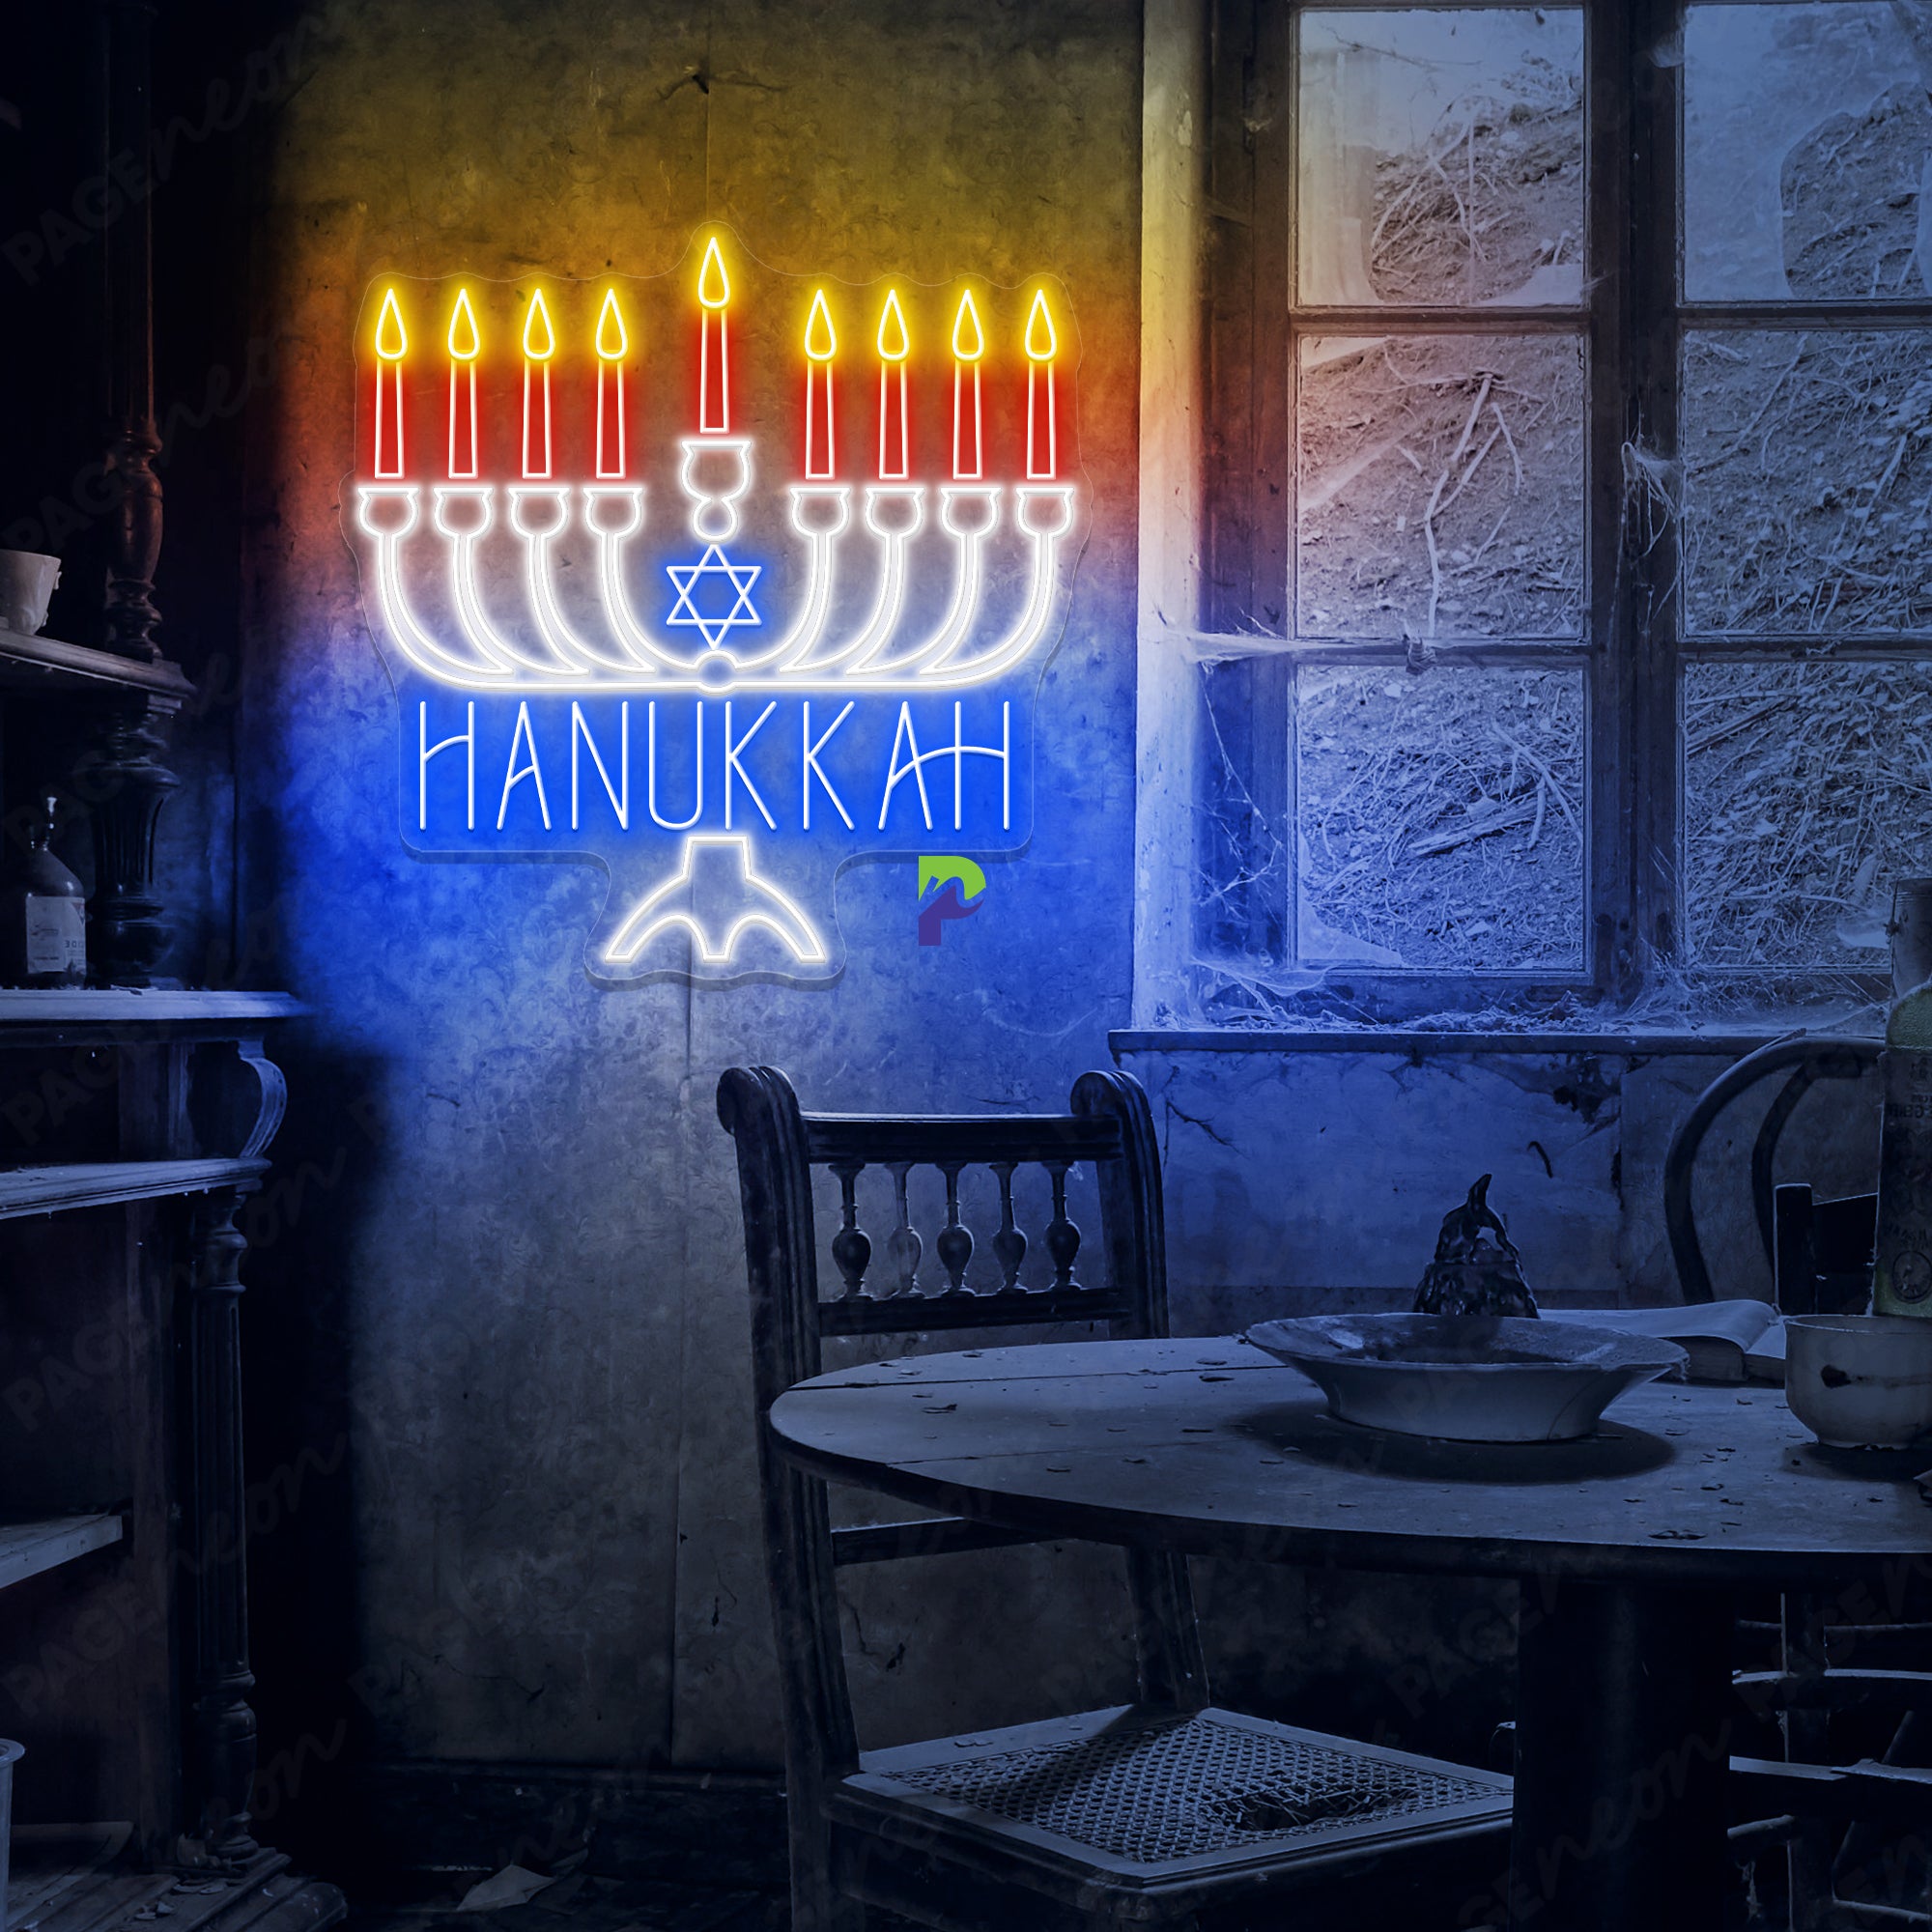 Hanukkah Neon Sign Led Light